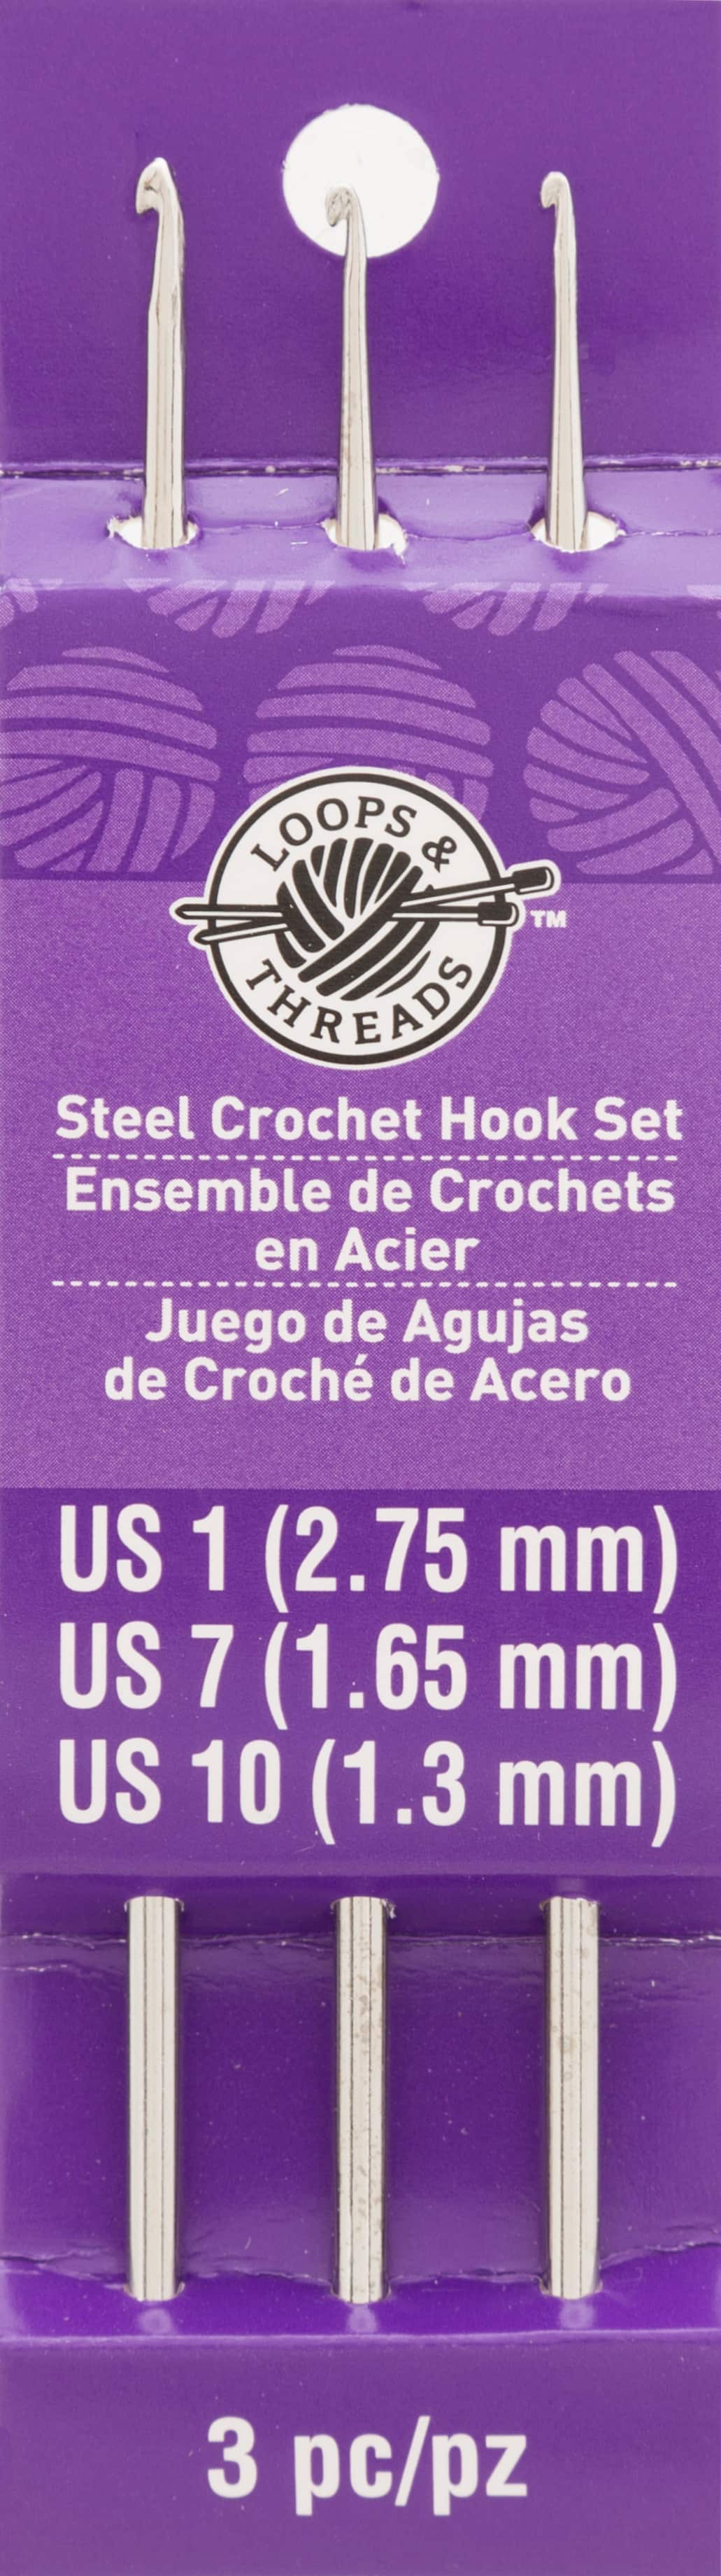 Loops & Threads 1/7/10 Steel Crochet Hook Set - each